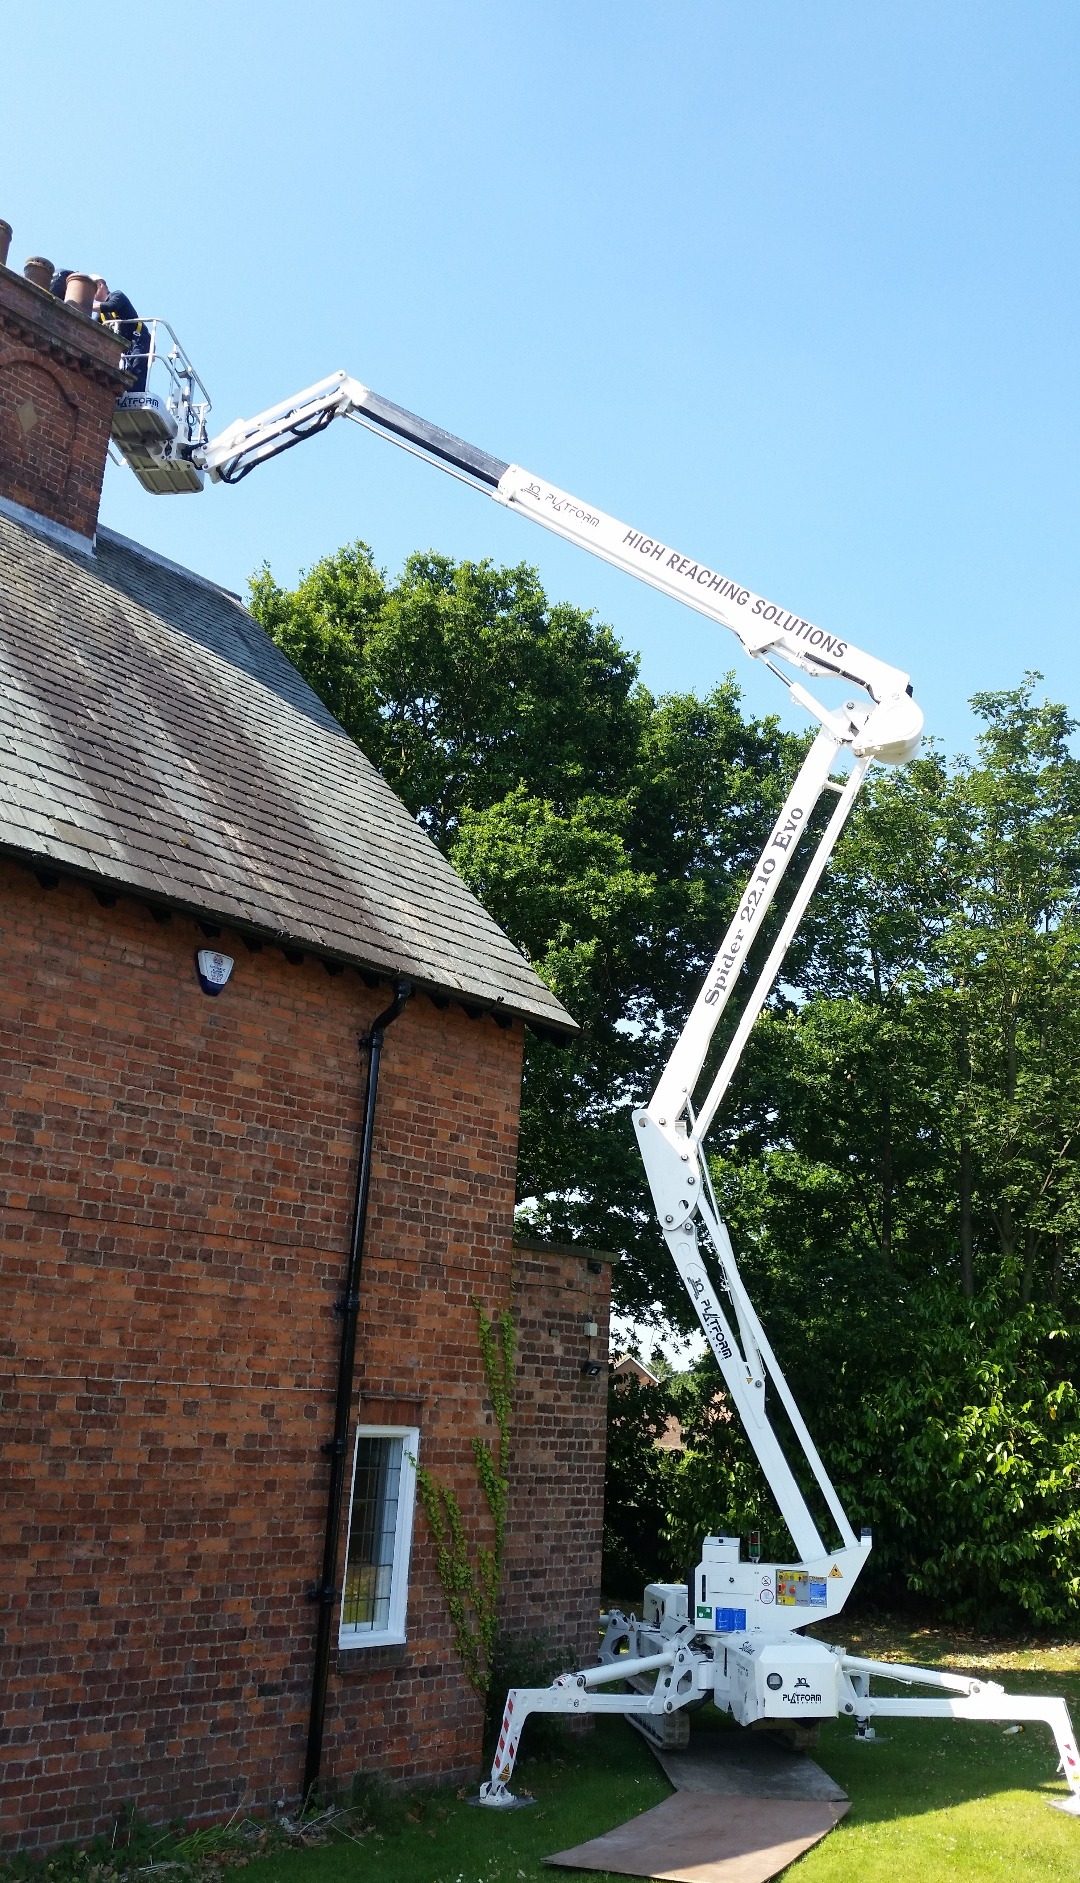 Tracked spider cherrypicker chimney maintenance